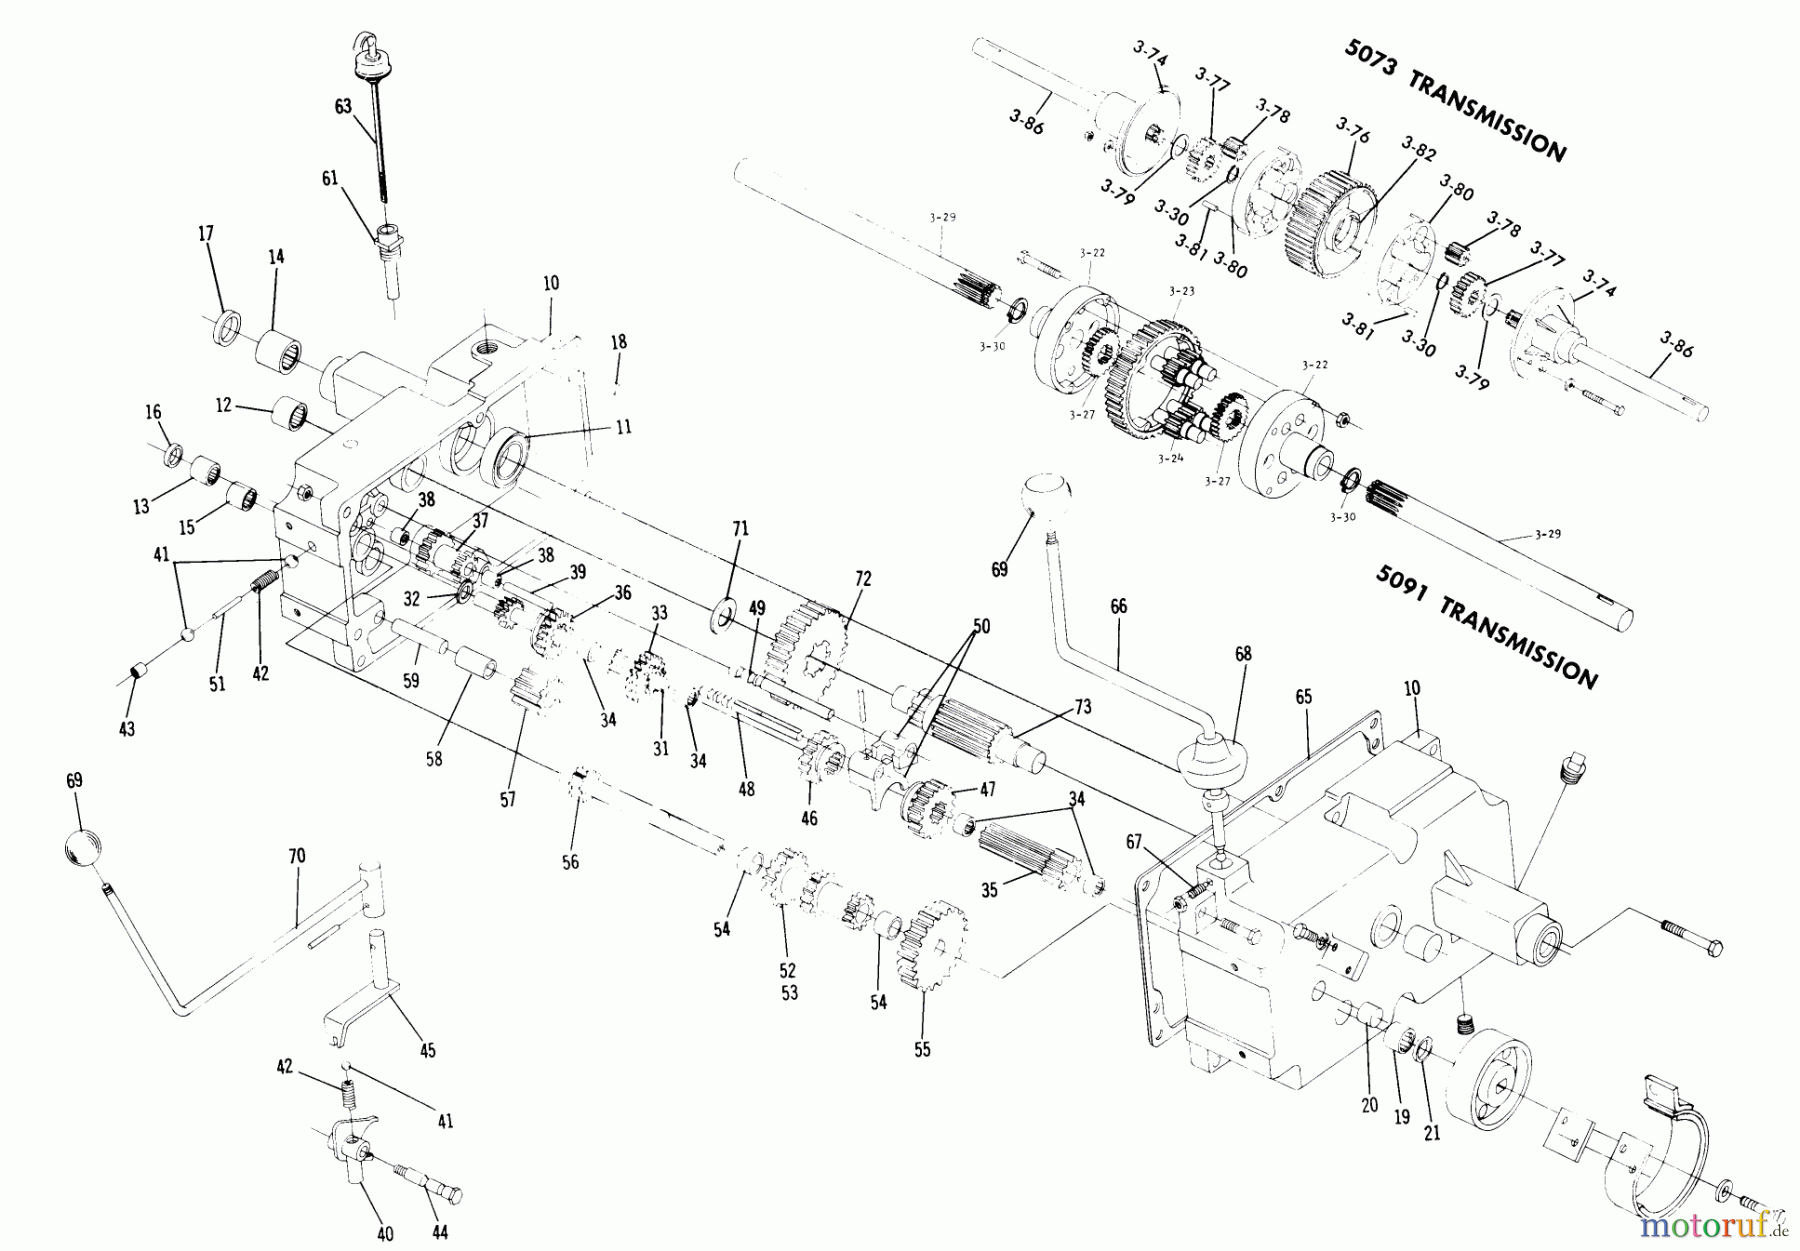  Toro Neu Mowers, Lawn & Garden Tractor Seite 1 1-0354 (C-120) - Toro C-120 8-Speed Tractor, 1974 TRANSMISSION 8-SPEED